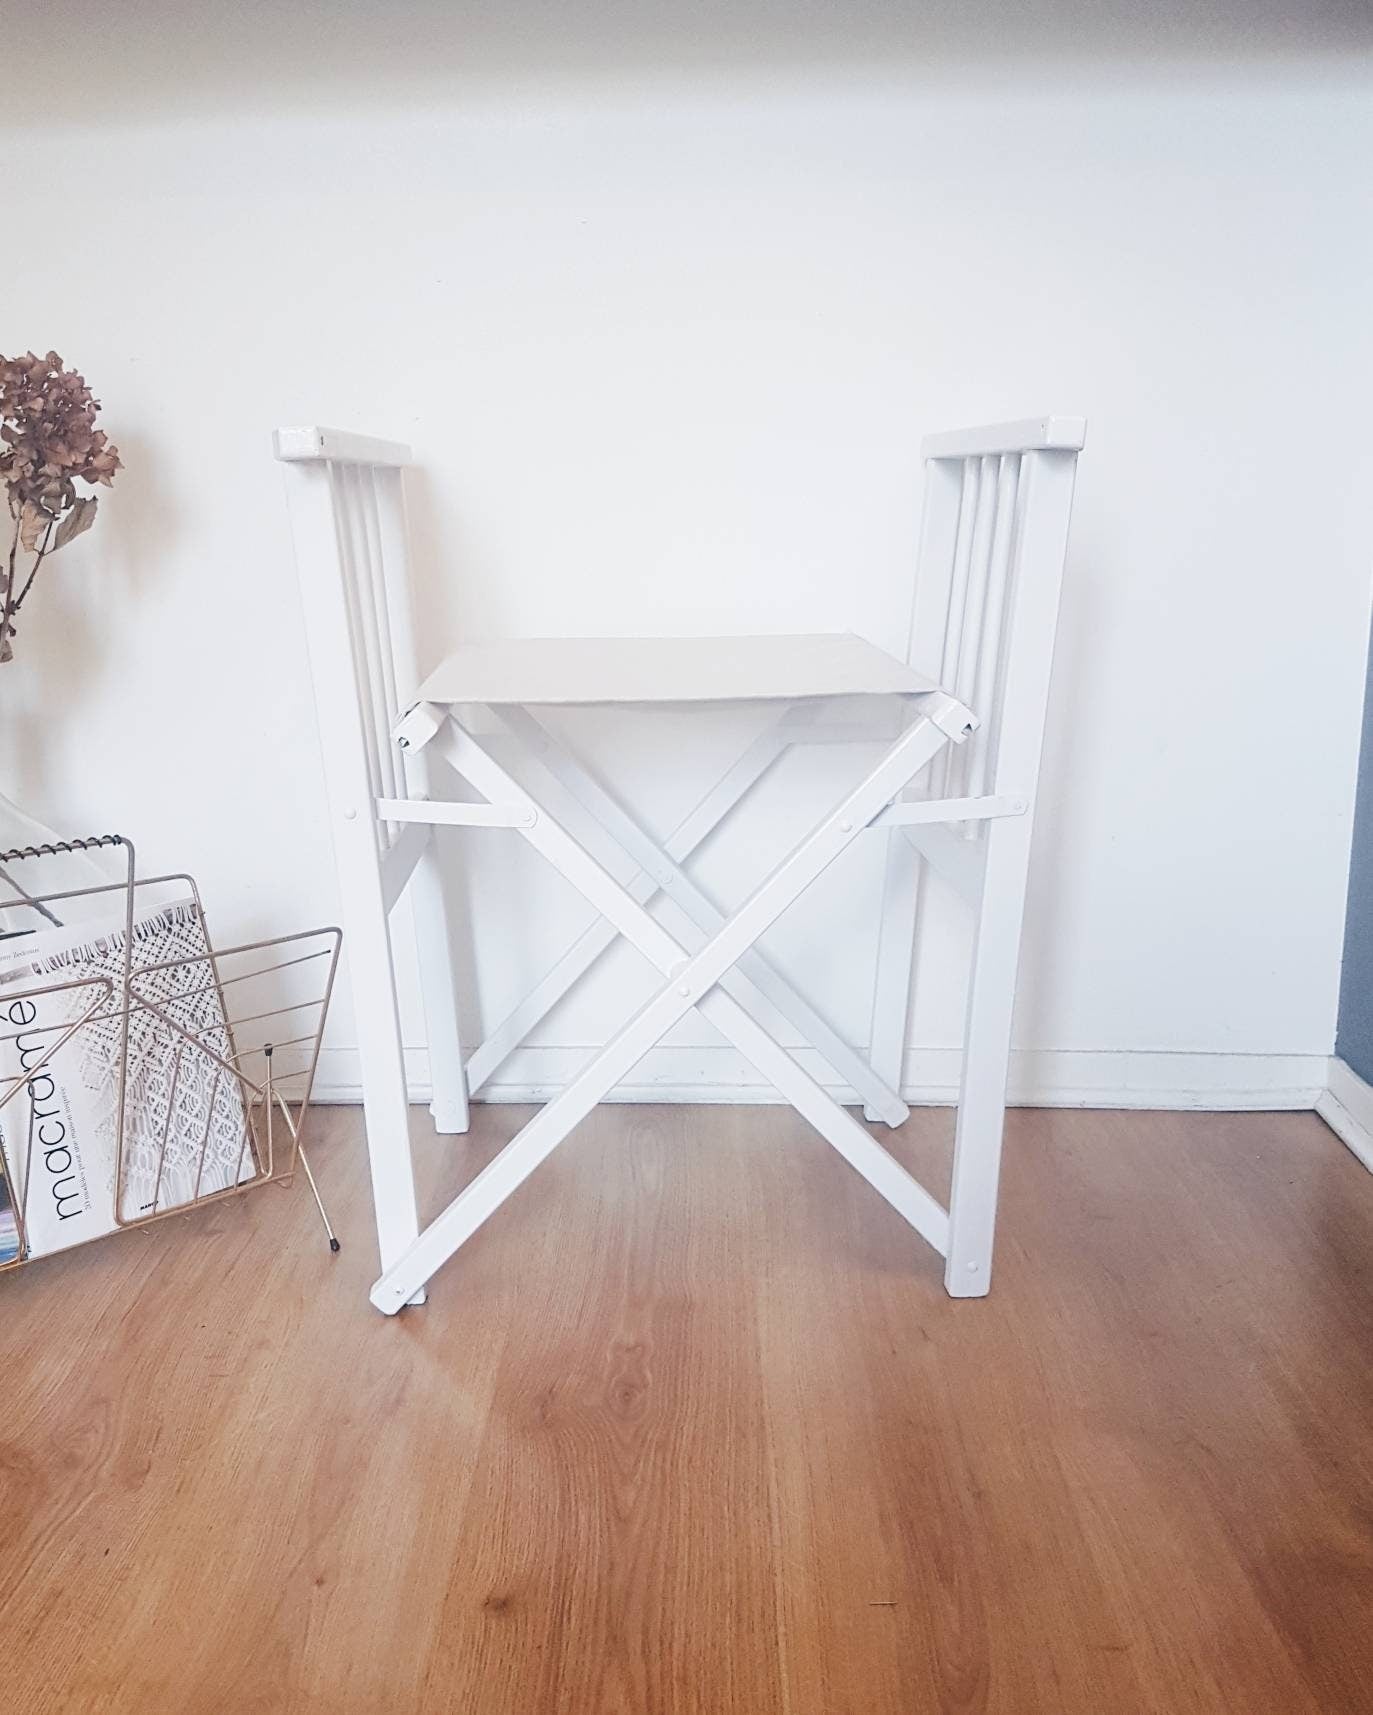 Chaise pliante vintage en bois blanc